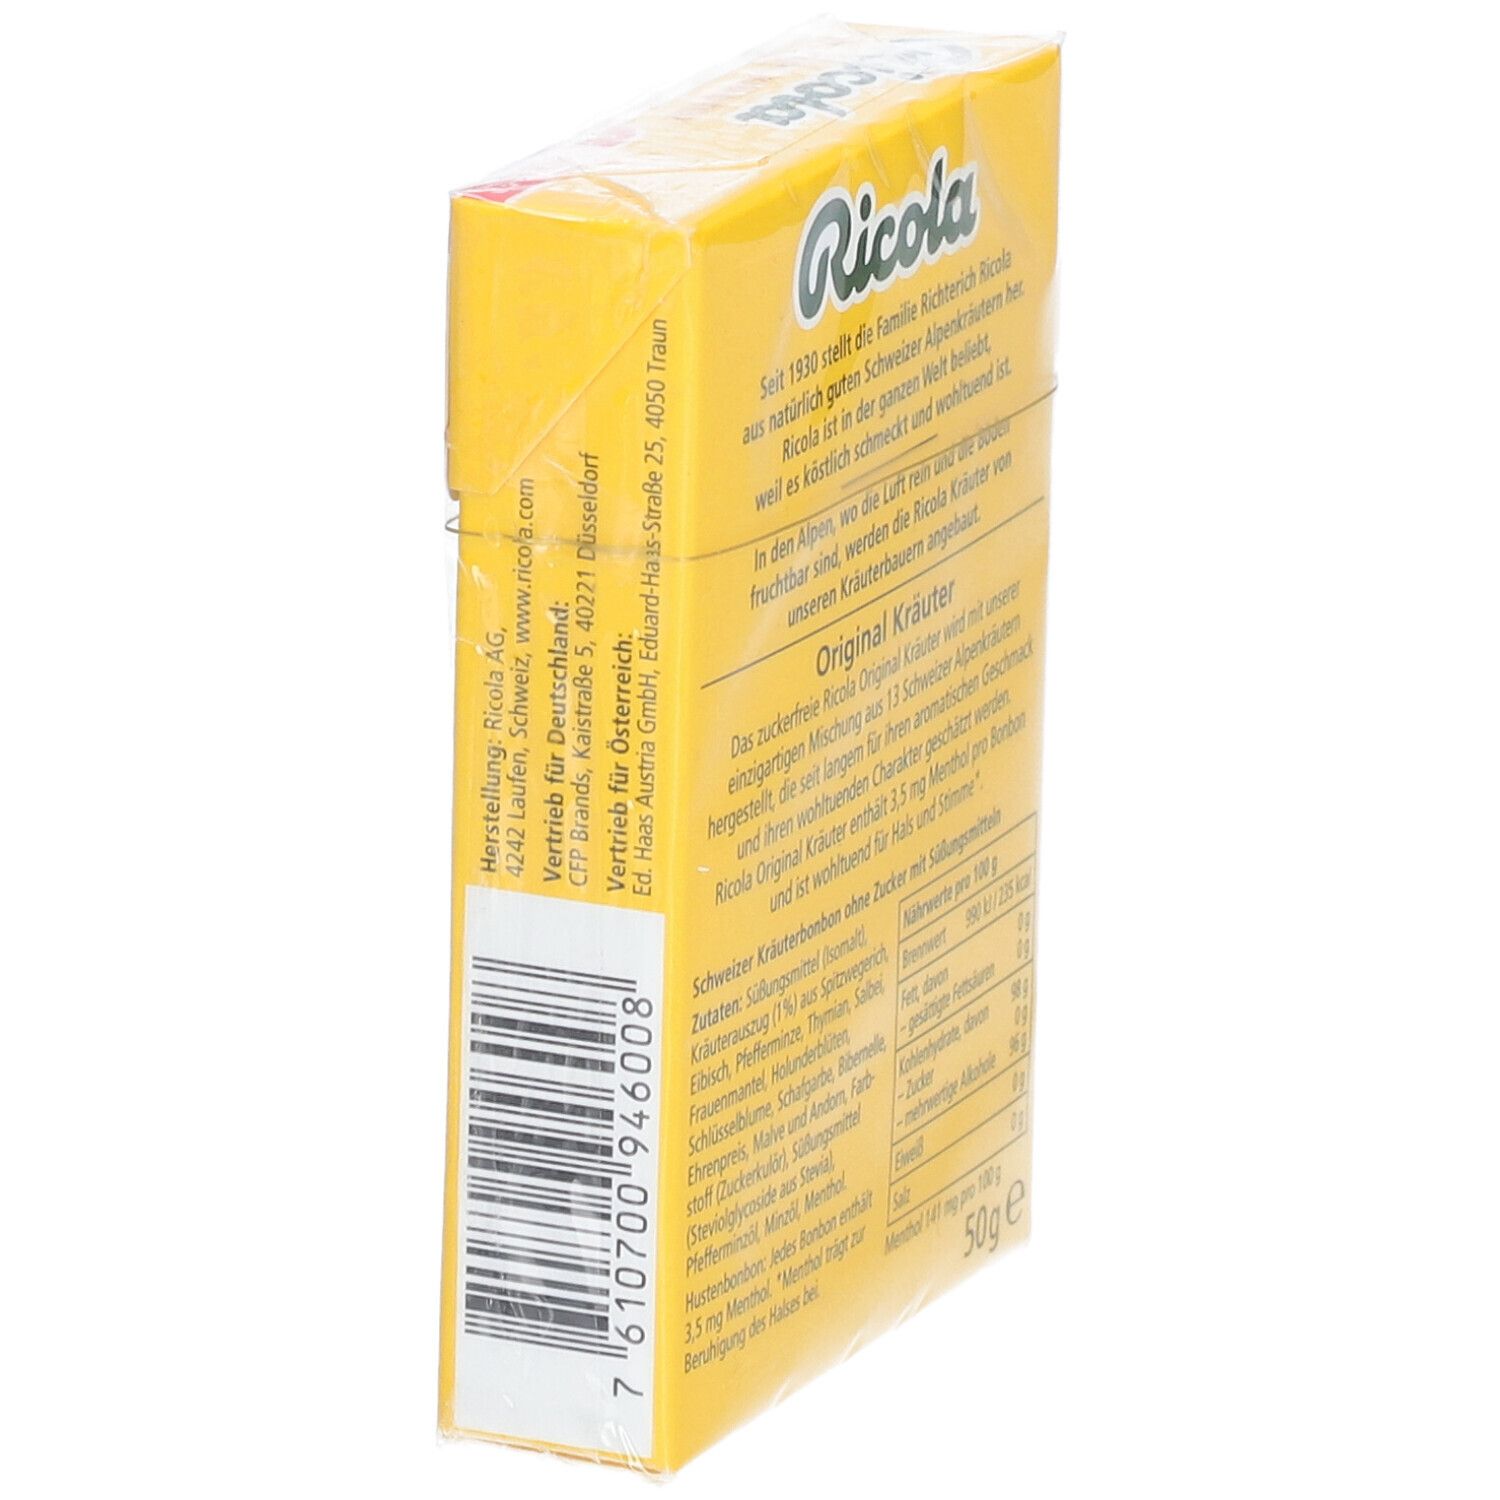 Ricola® Schweizer Kräuterbonbons Box Kräuter Original ohne Zucker